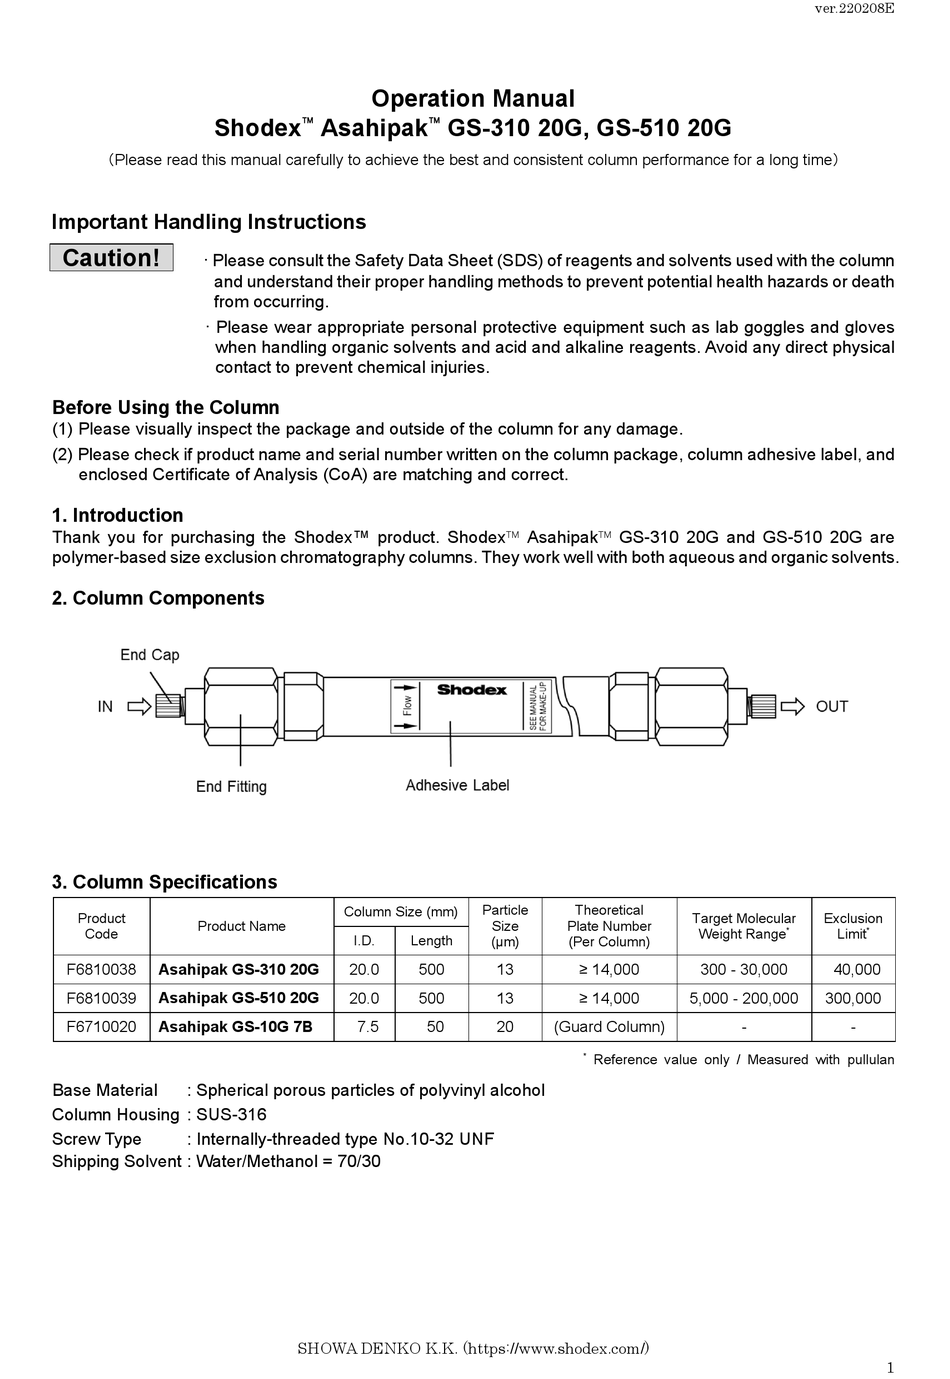 SHODEX ASAHIPAK GS-310 20G OPERATION MANUAL Pdf Download | ManualsLib